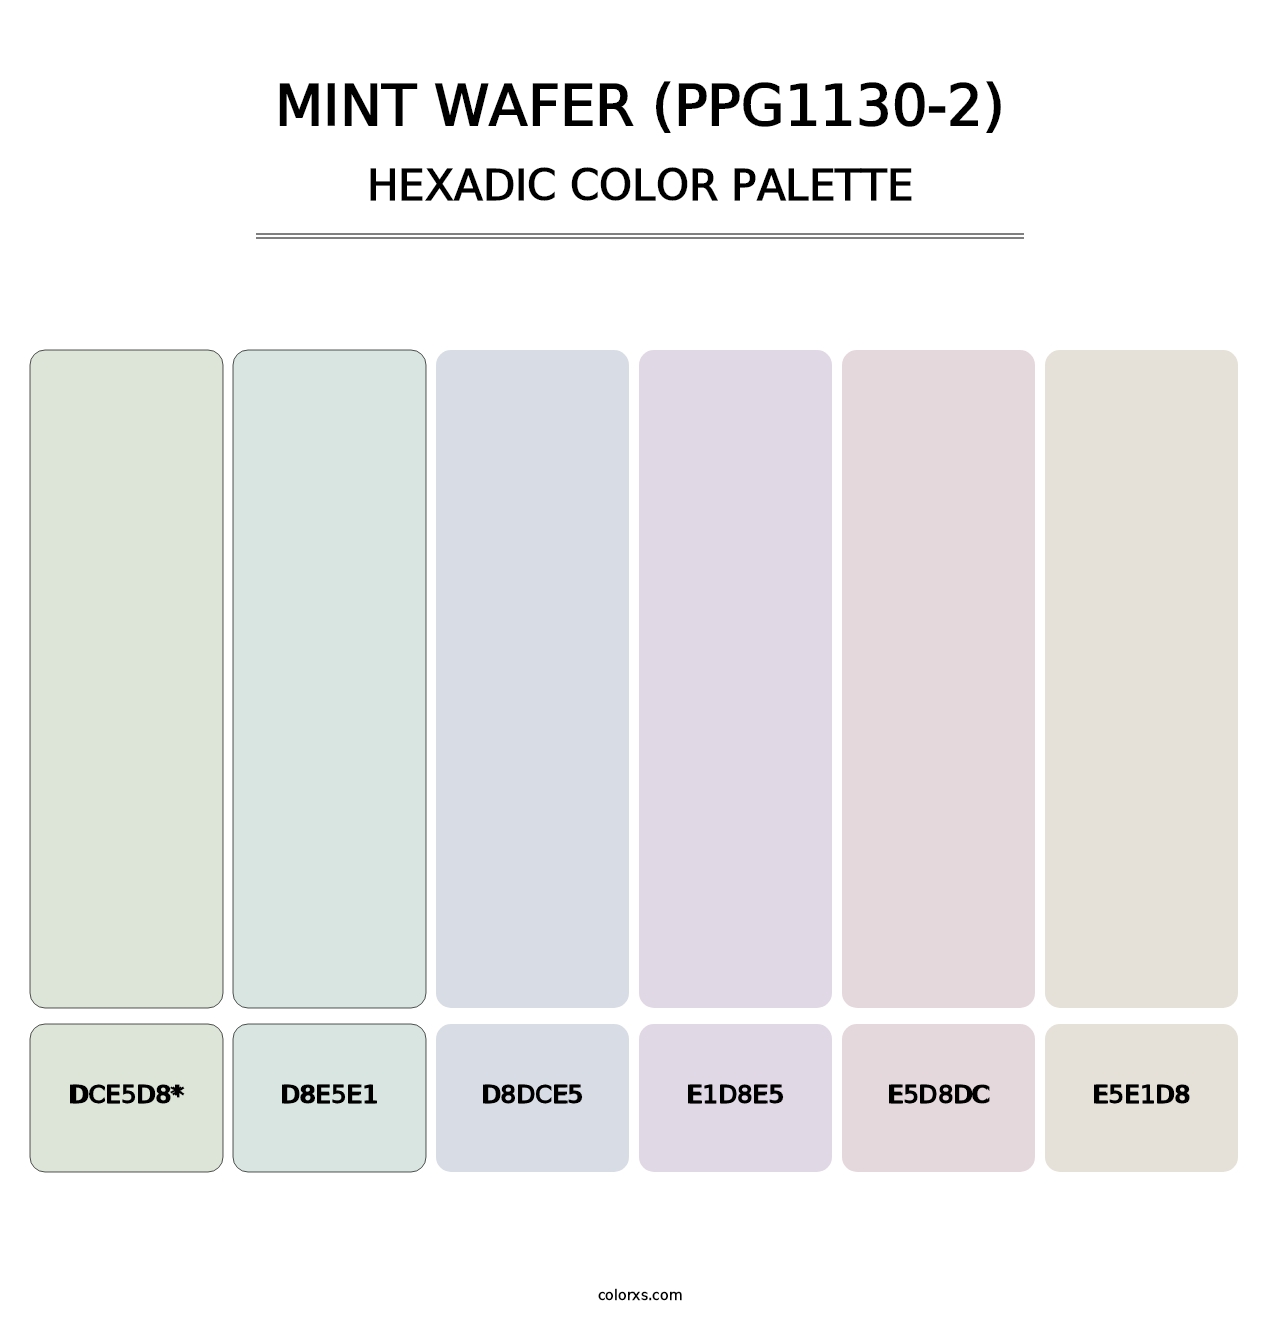 Mint Wafer (PPG1130-2) - Hexadic Color Palette